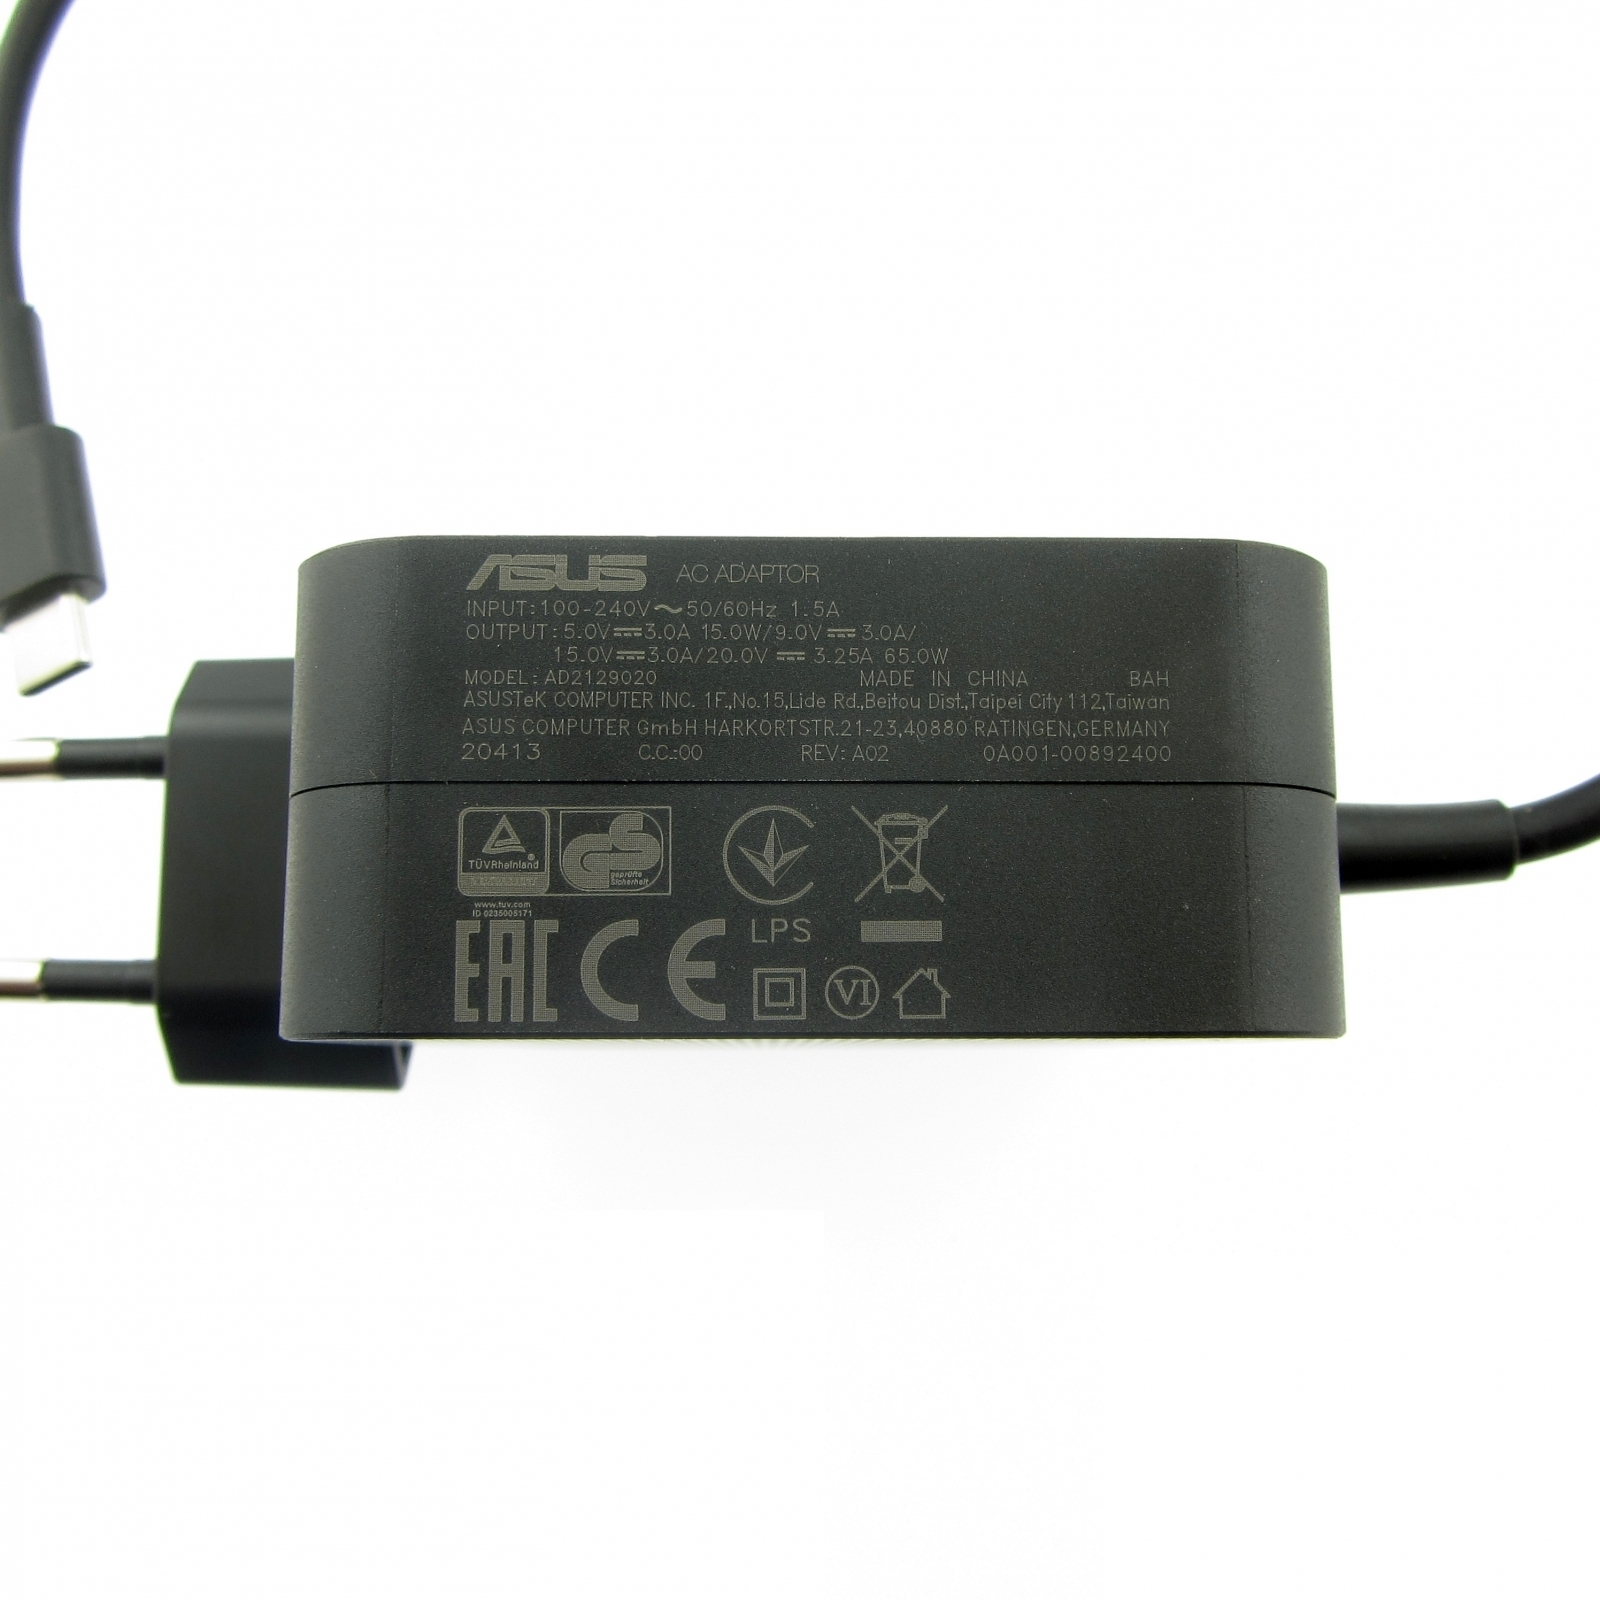 Netzteil 0A001-00892400 Watt USB-C EU Wallplug Original 65 ASUS